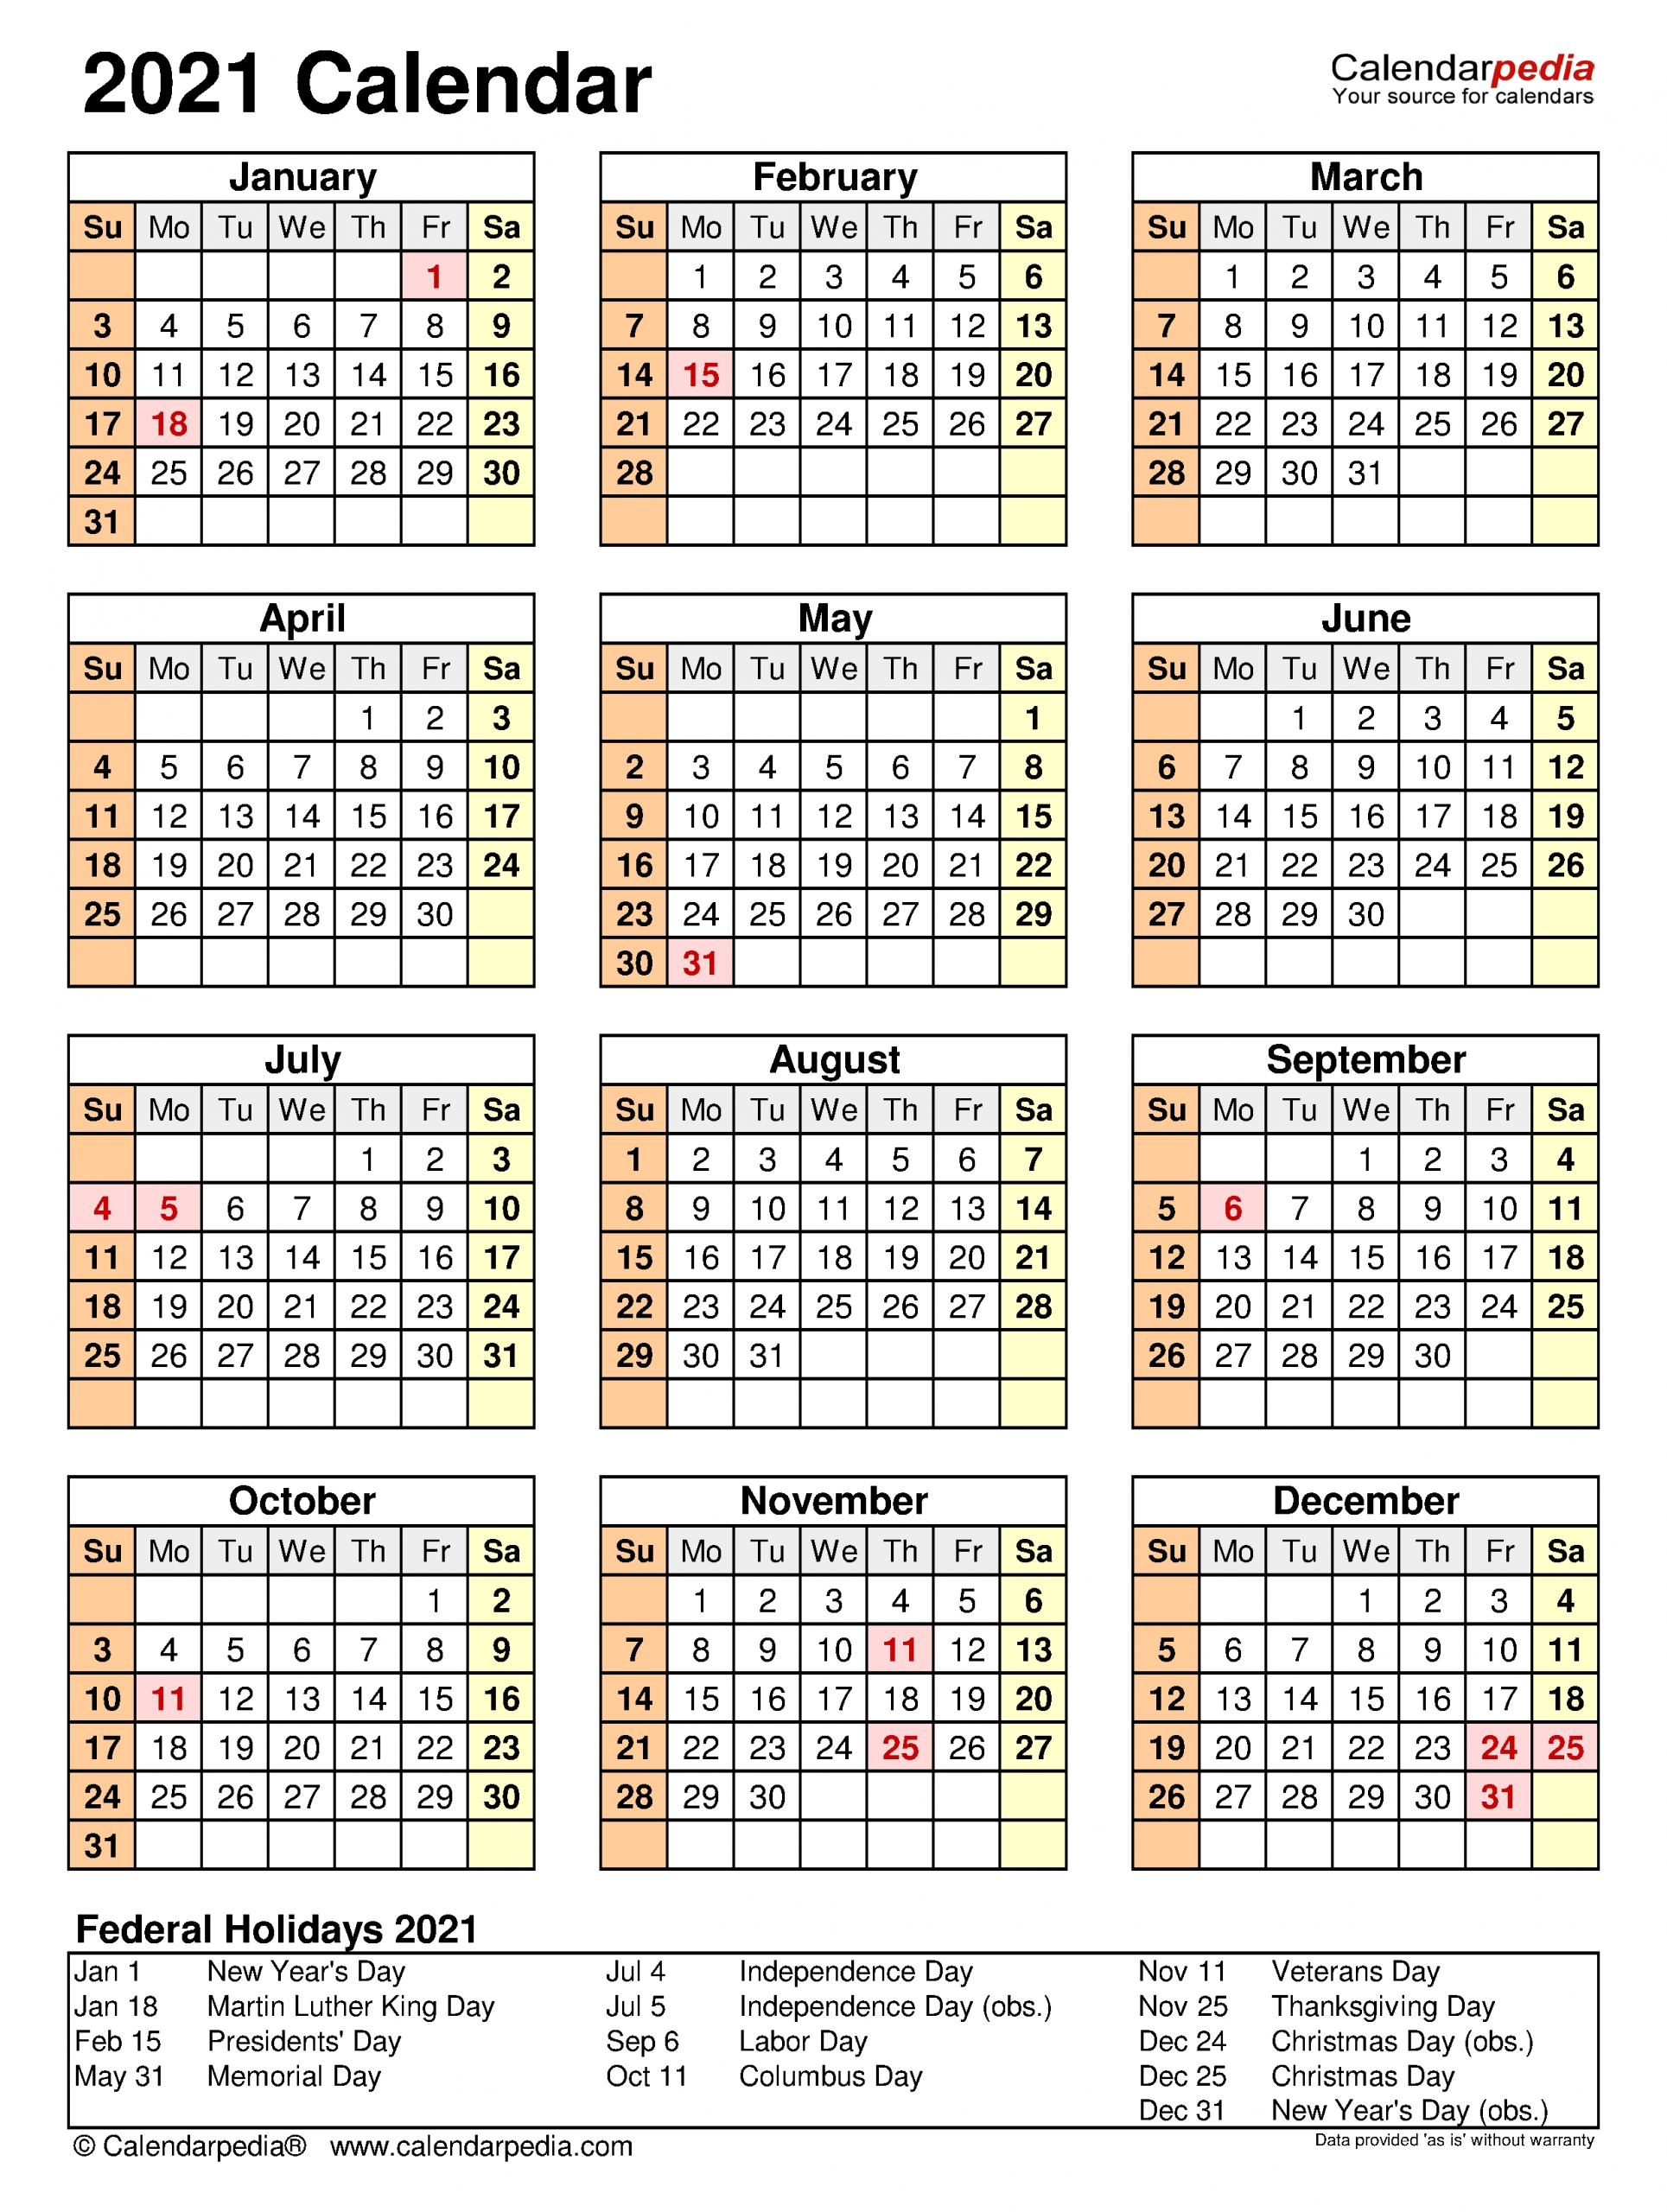 2021 Calendar - Free Printable Excel Templates - Calendarpedia-Excel List Of 2021 Holidays